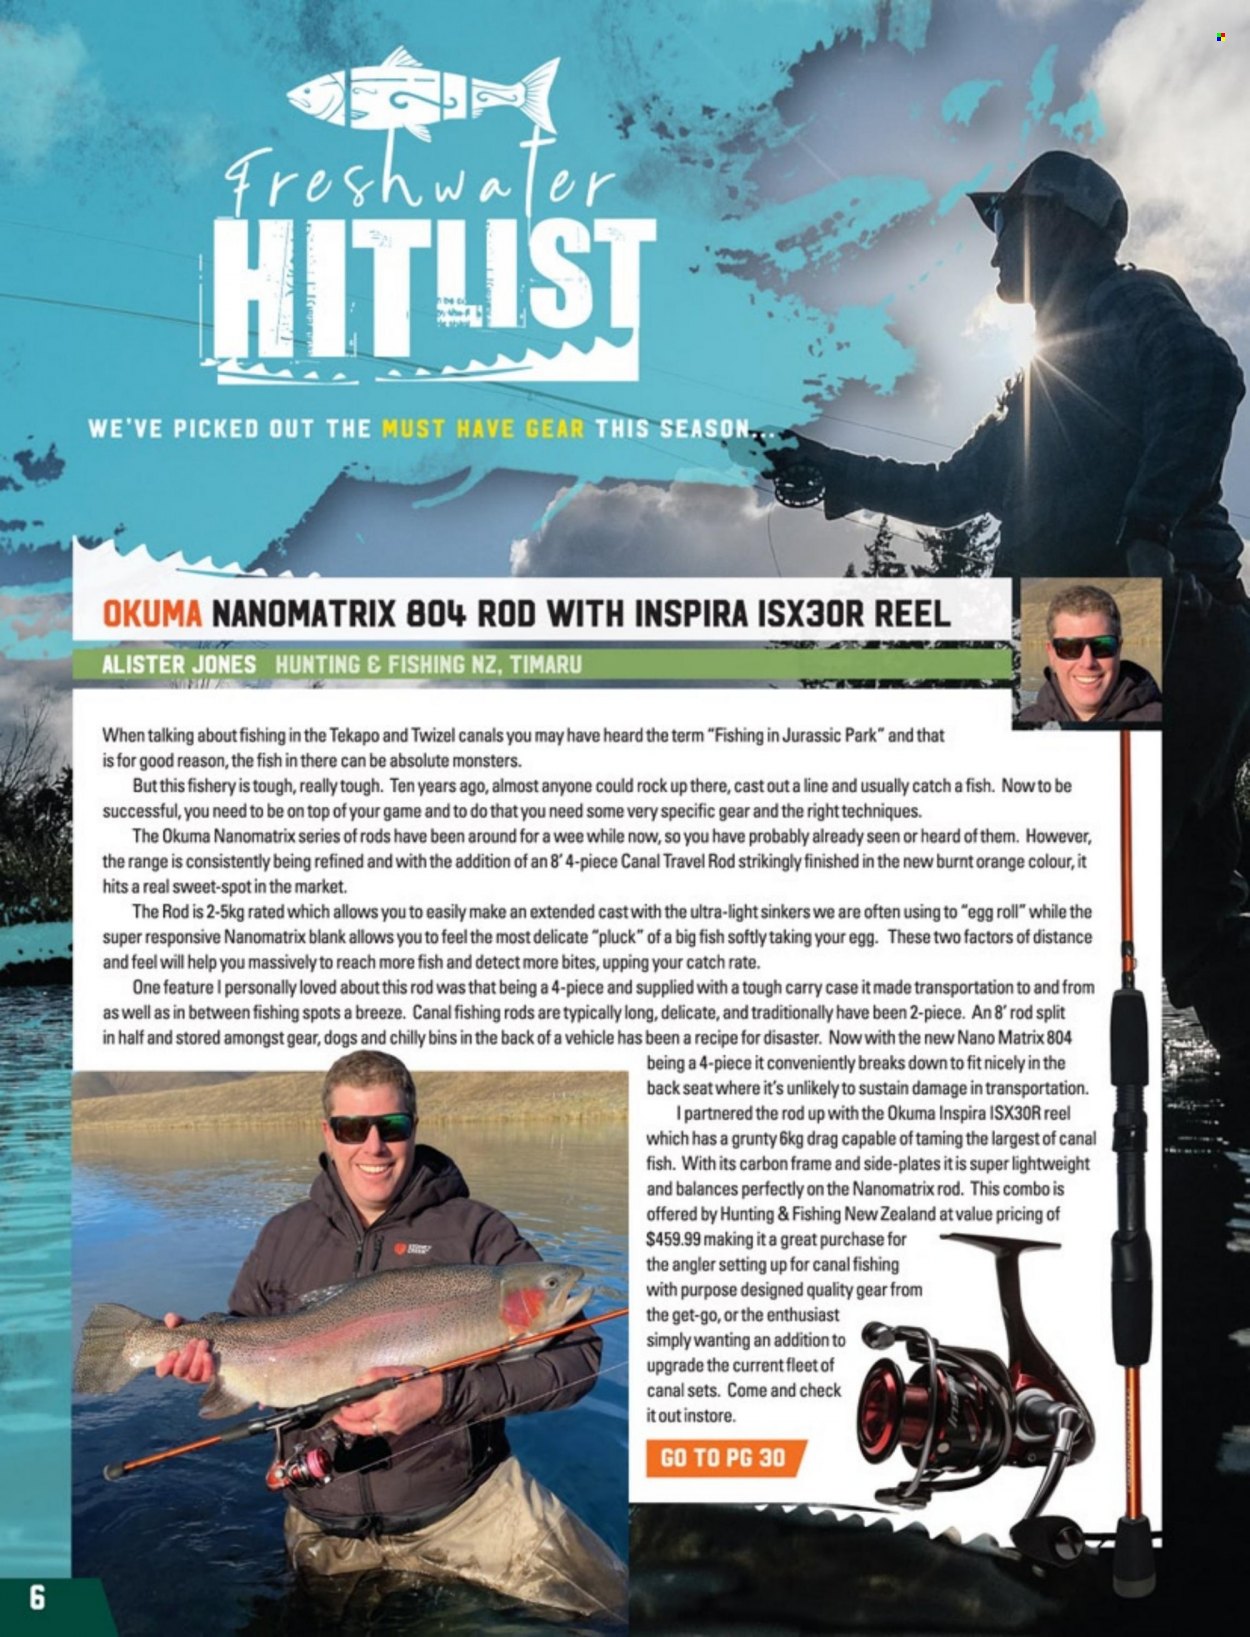 Hunting & Fishing mailer . Page 6.